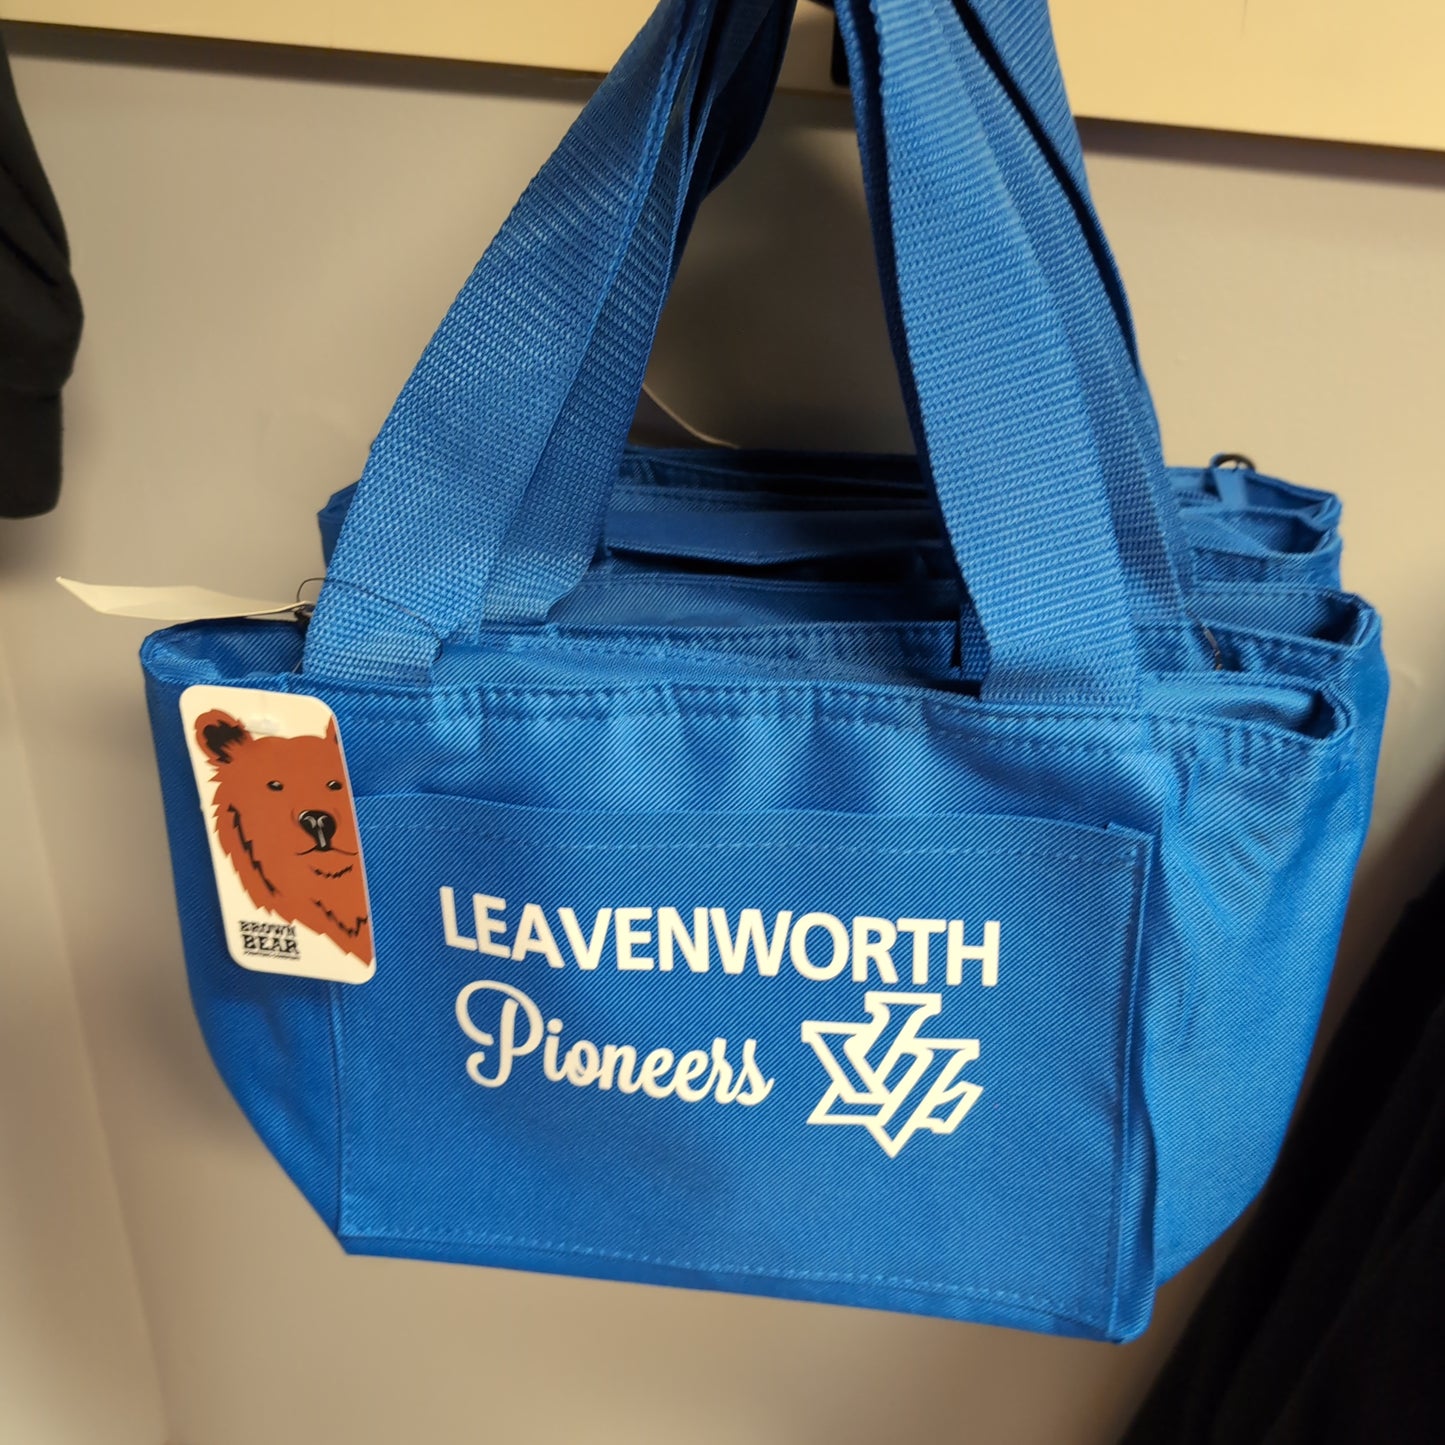 Leavenworth pioneers lunch box